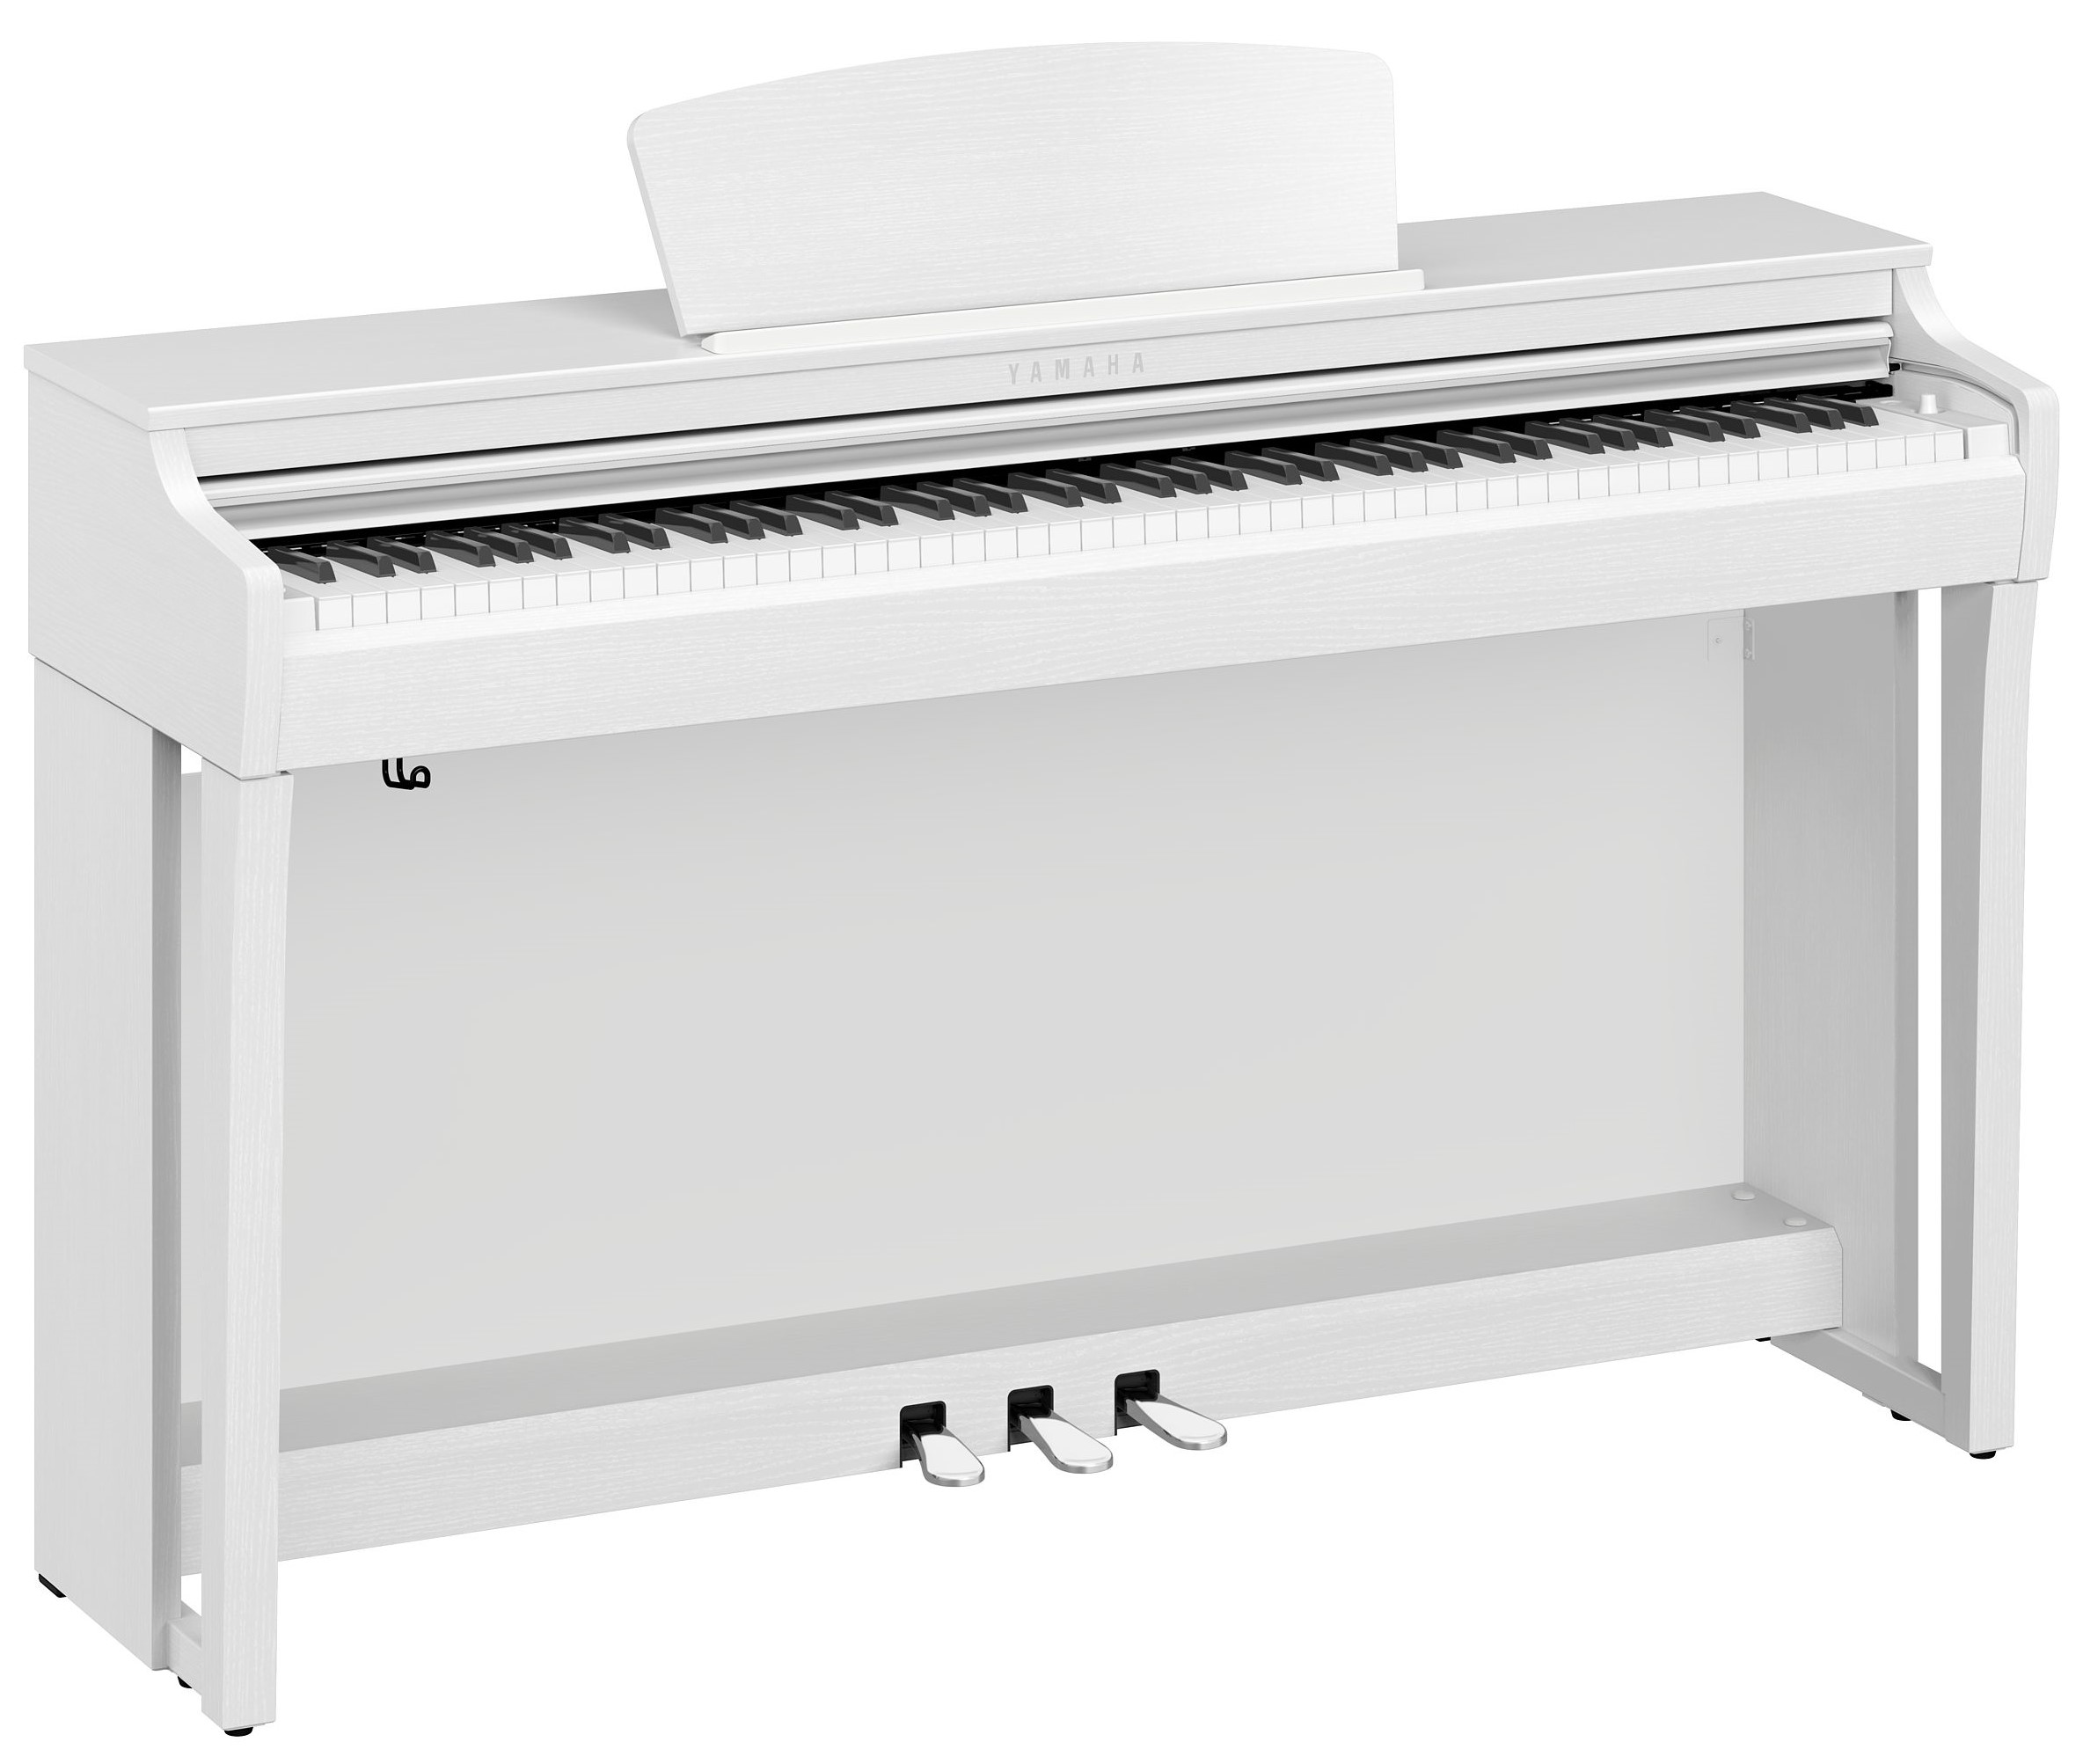 Yamaha Clp 725 Wh - Digitalpiano mit Stand - Variation 1